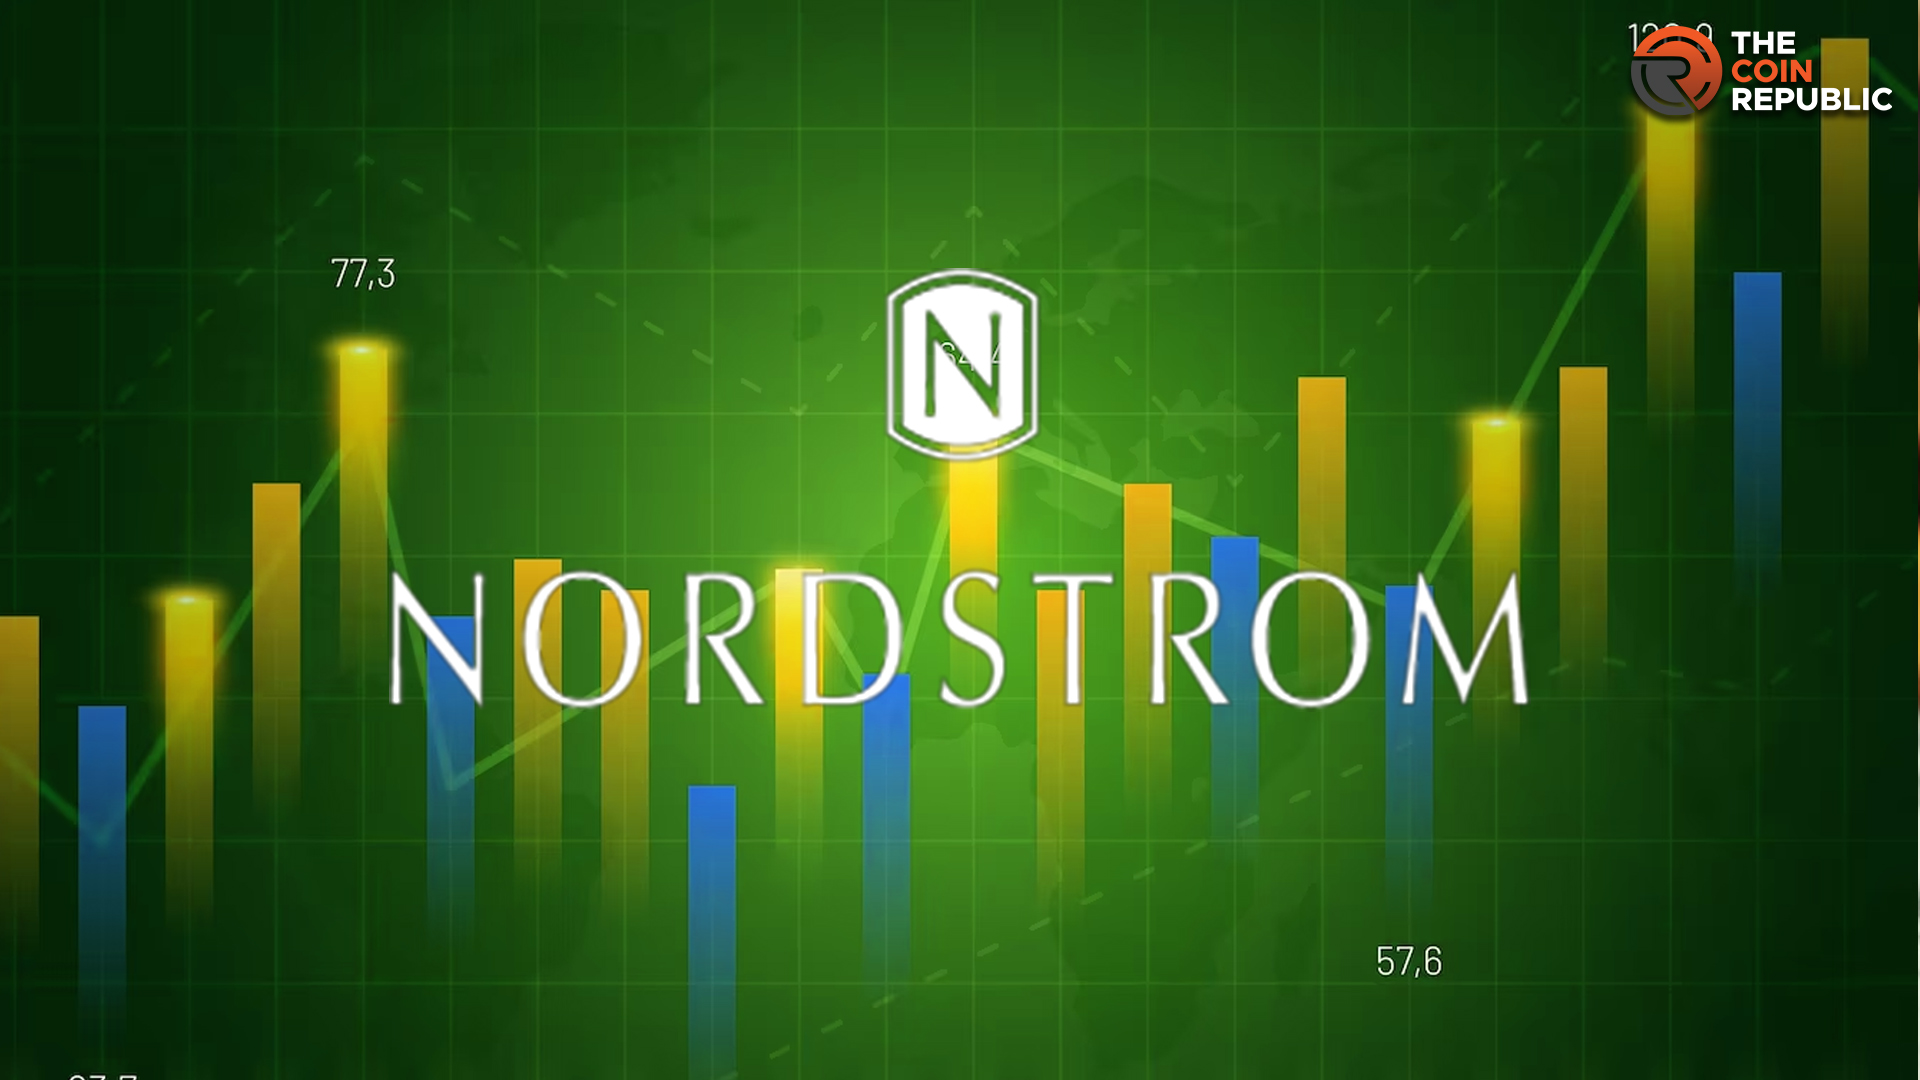 JWN Stock Price Prediction: Will Nordstrom Share Crash More?